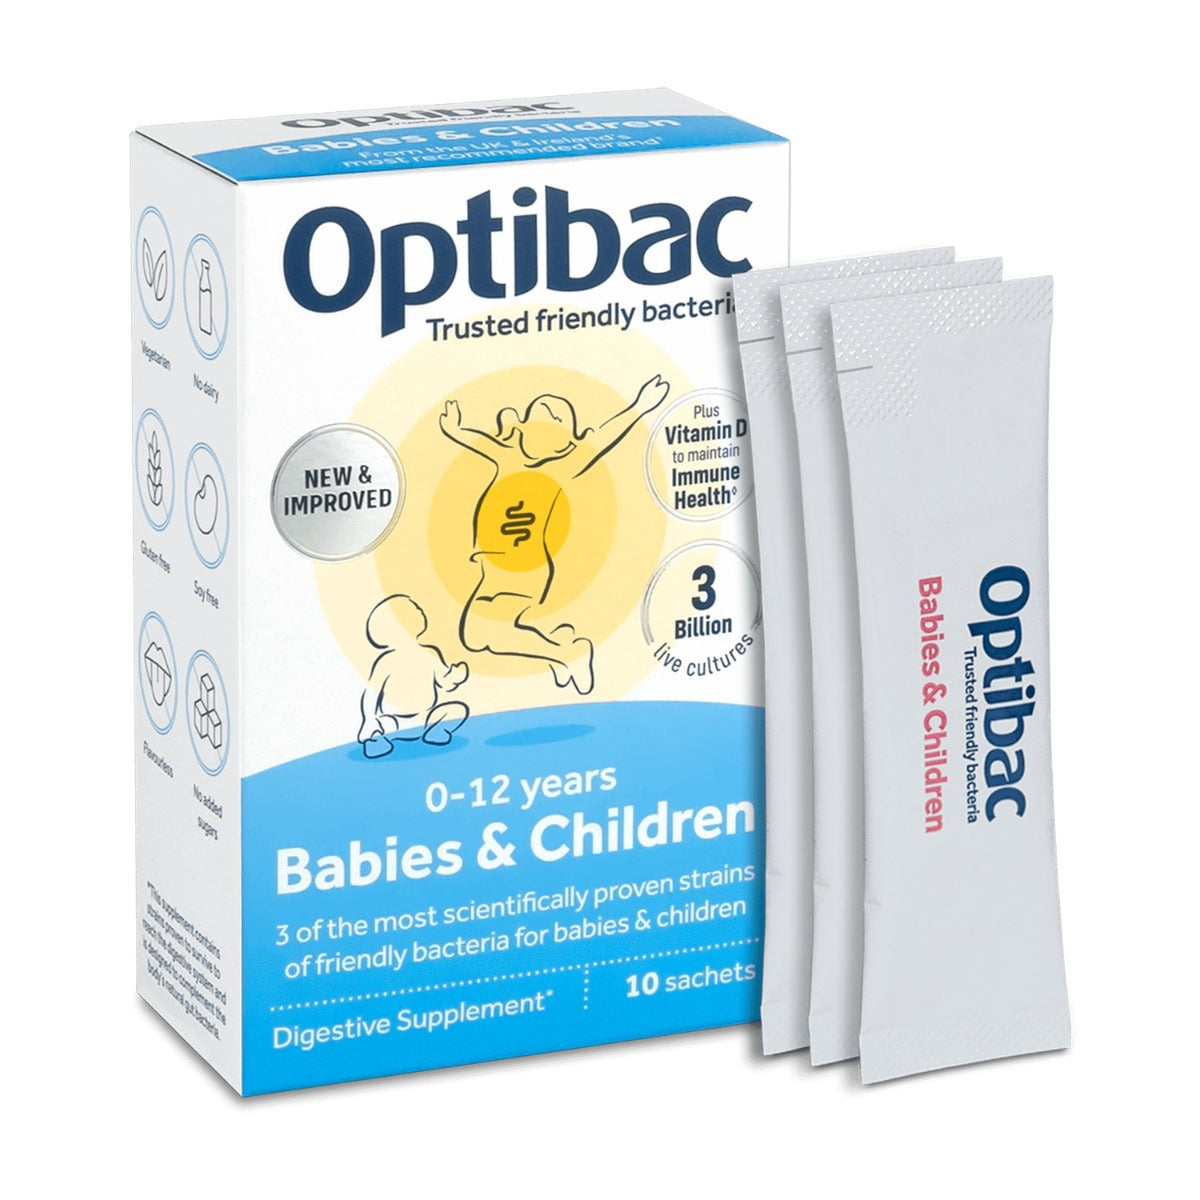 Optibac Babies & Children 10 Sachets